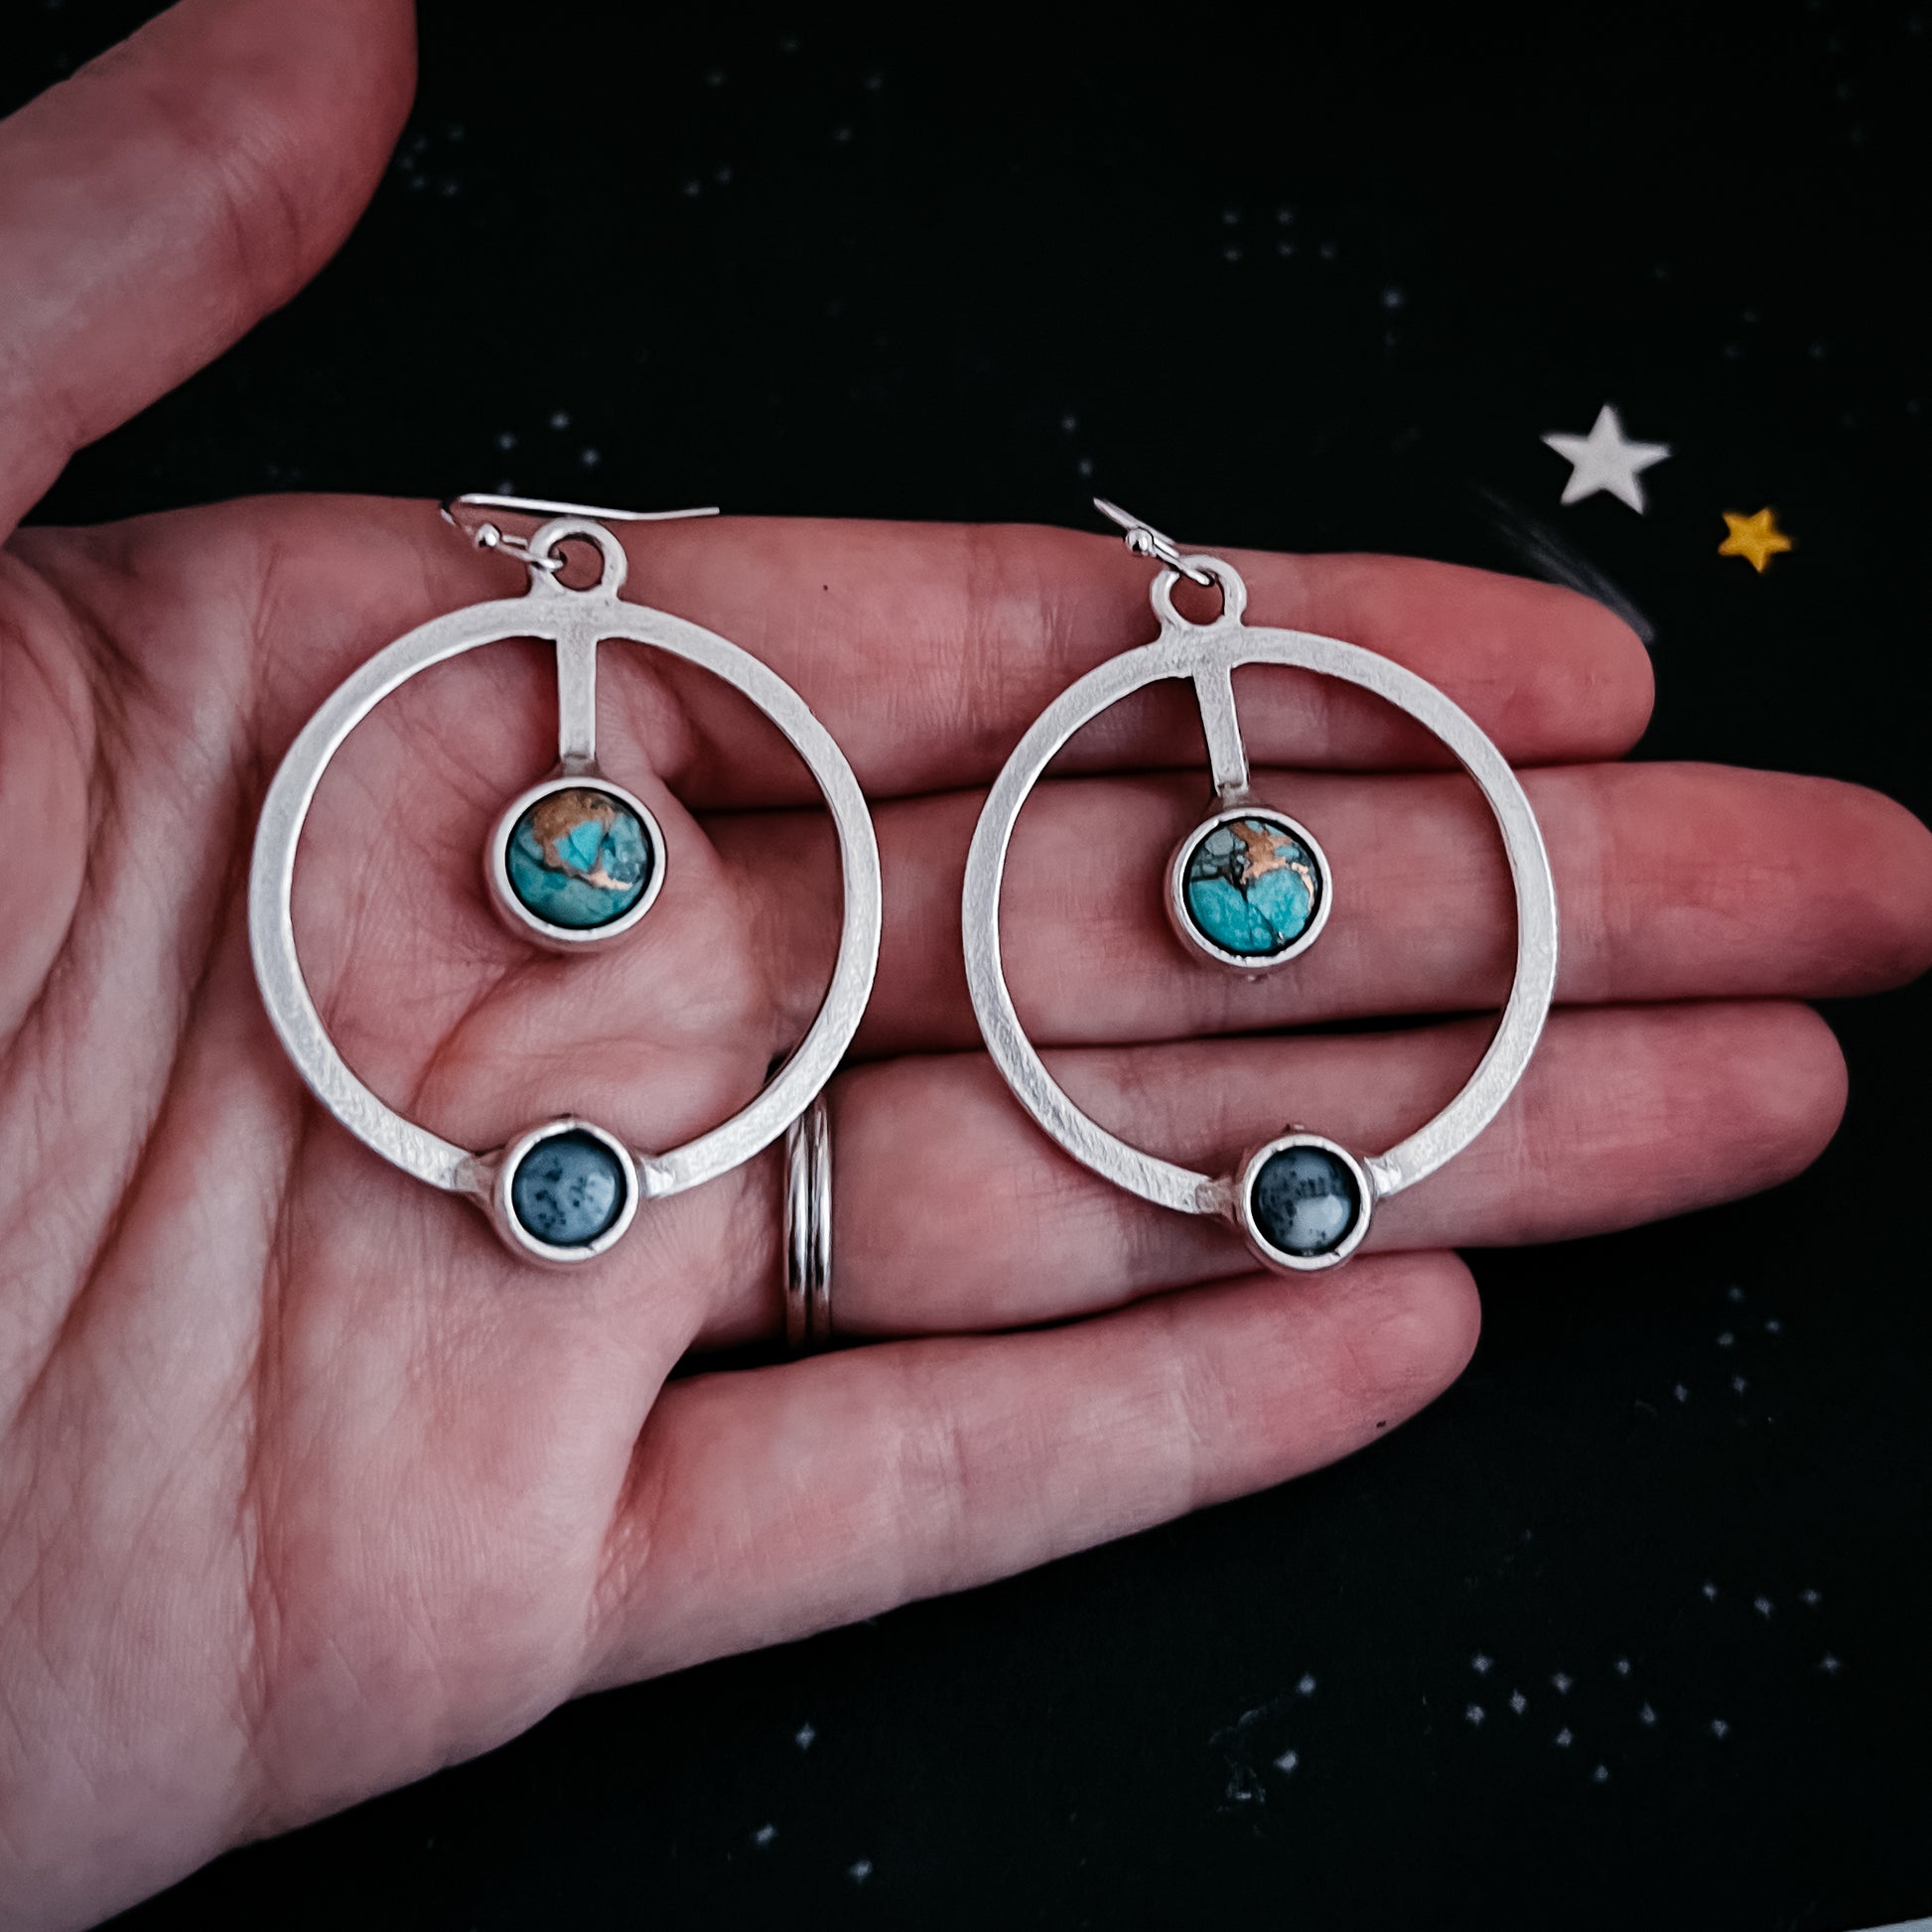 Artemis Earrings - Lunar Orbit Dangles with Natural Stones Earrings Yugen Handmade   